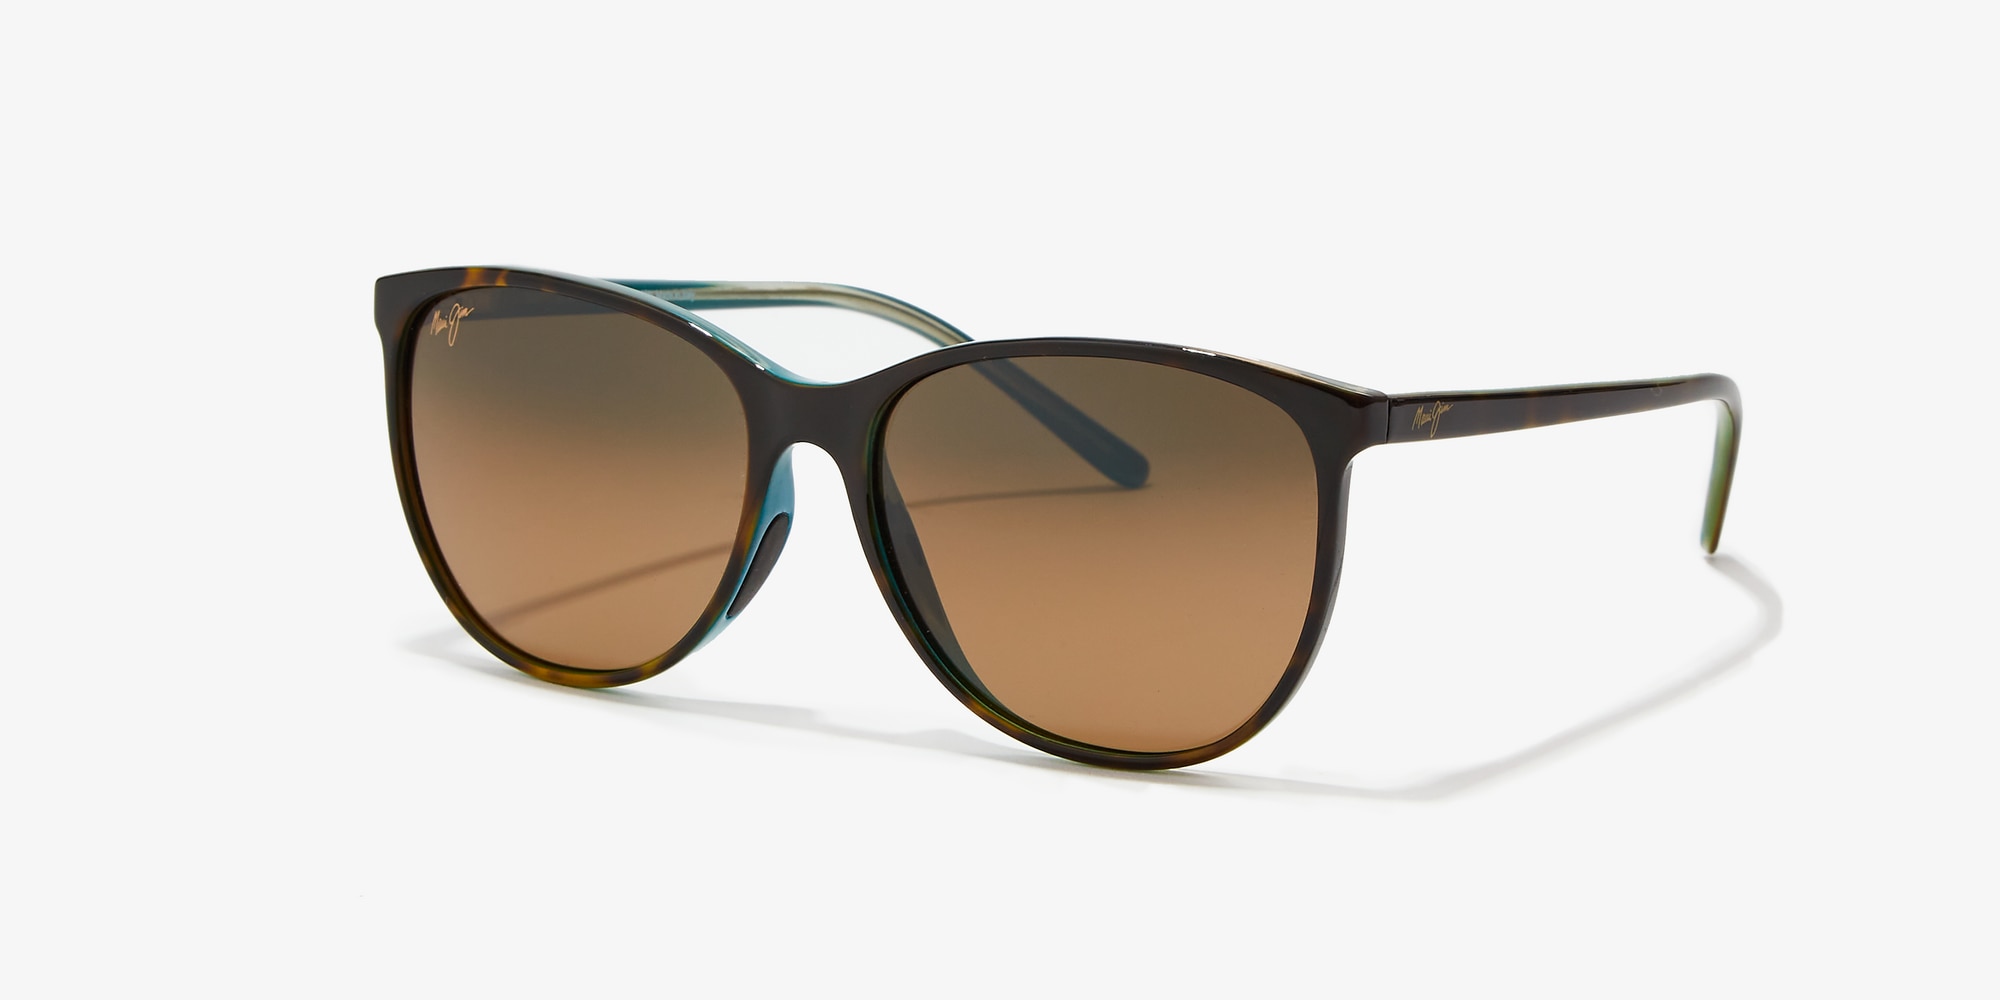 Maui Jim Polarized Sunglasses | Polarized sunglasses, Maui jim, Maui jim  sunglasses